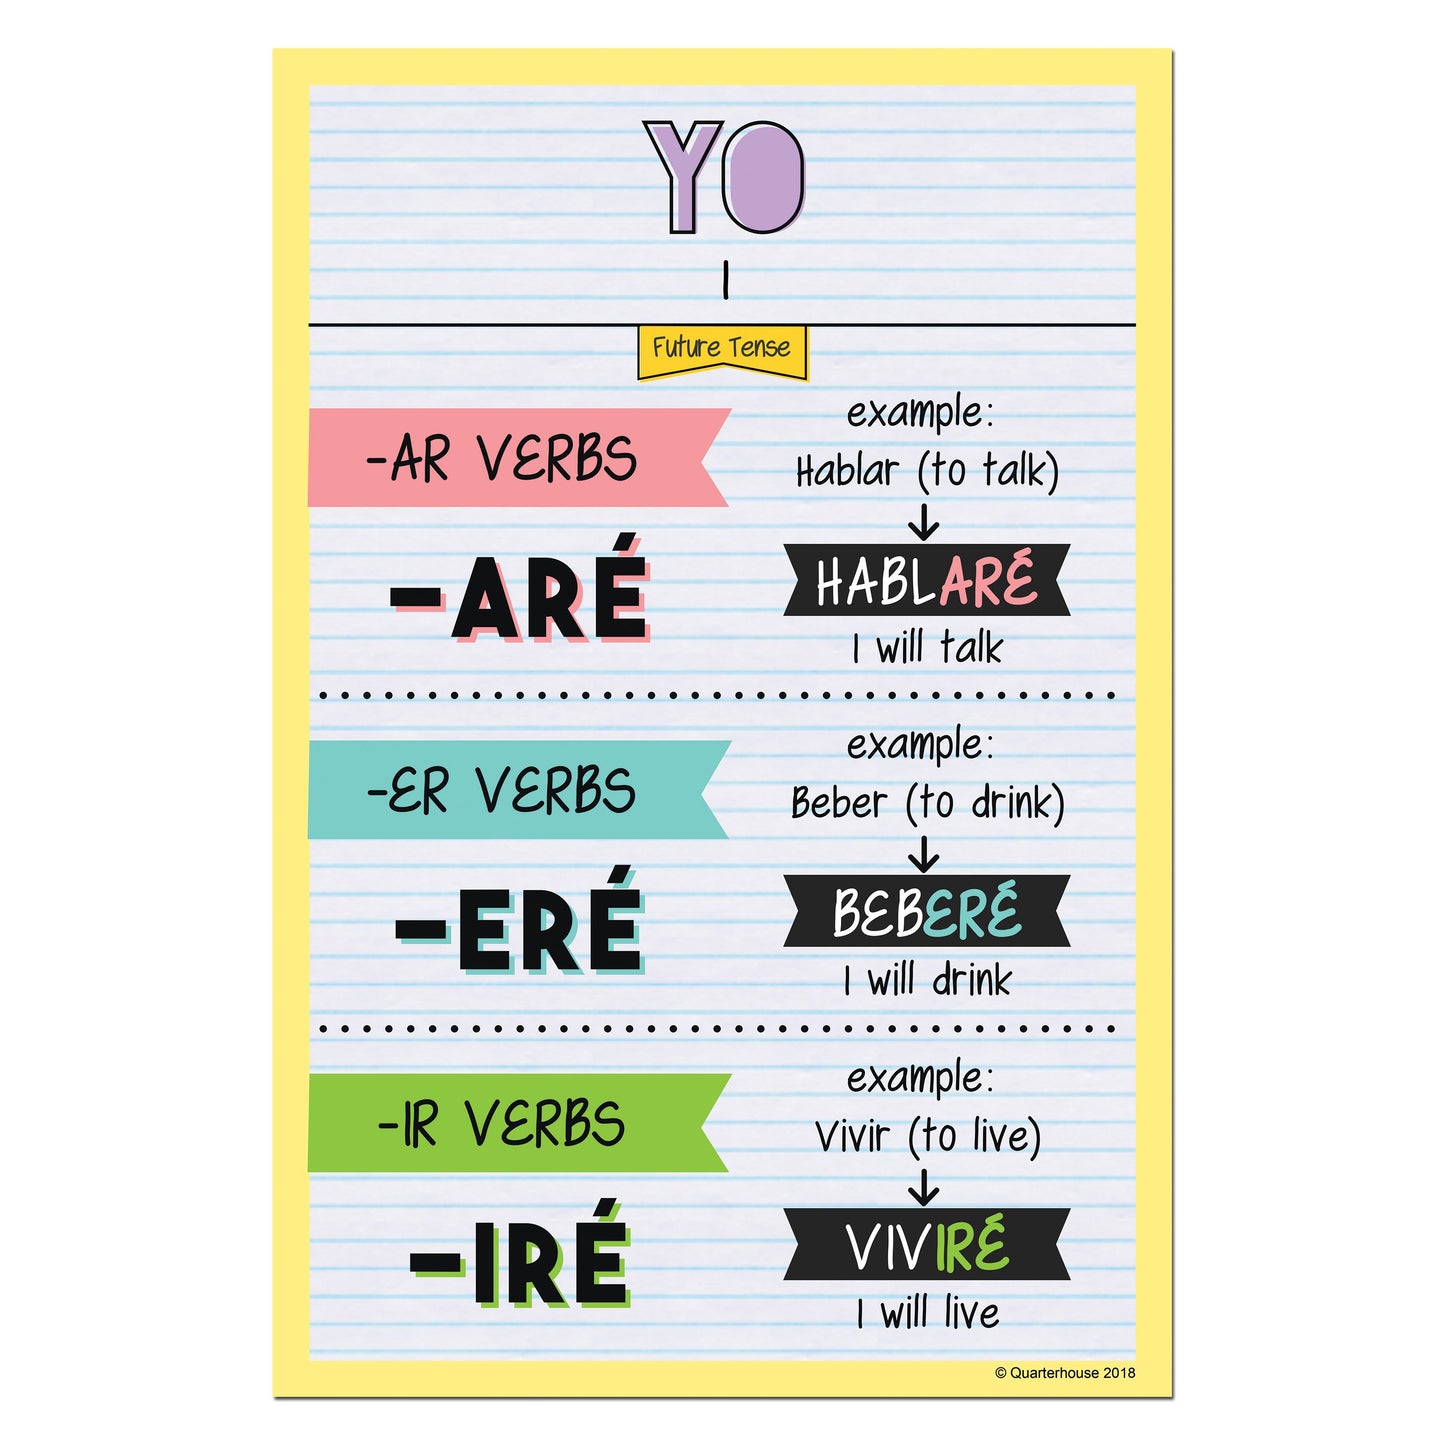 Quarterhouse Yo - Future Tense Spanish Verb Conjugation Poster, Spanish and ESL Classroom Materials for Teachers